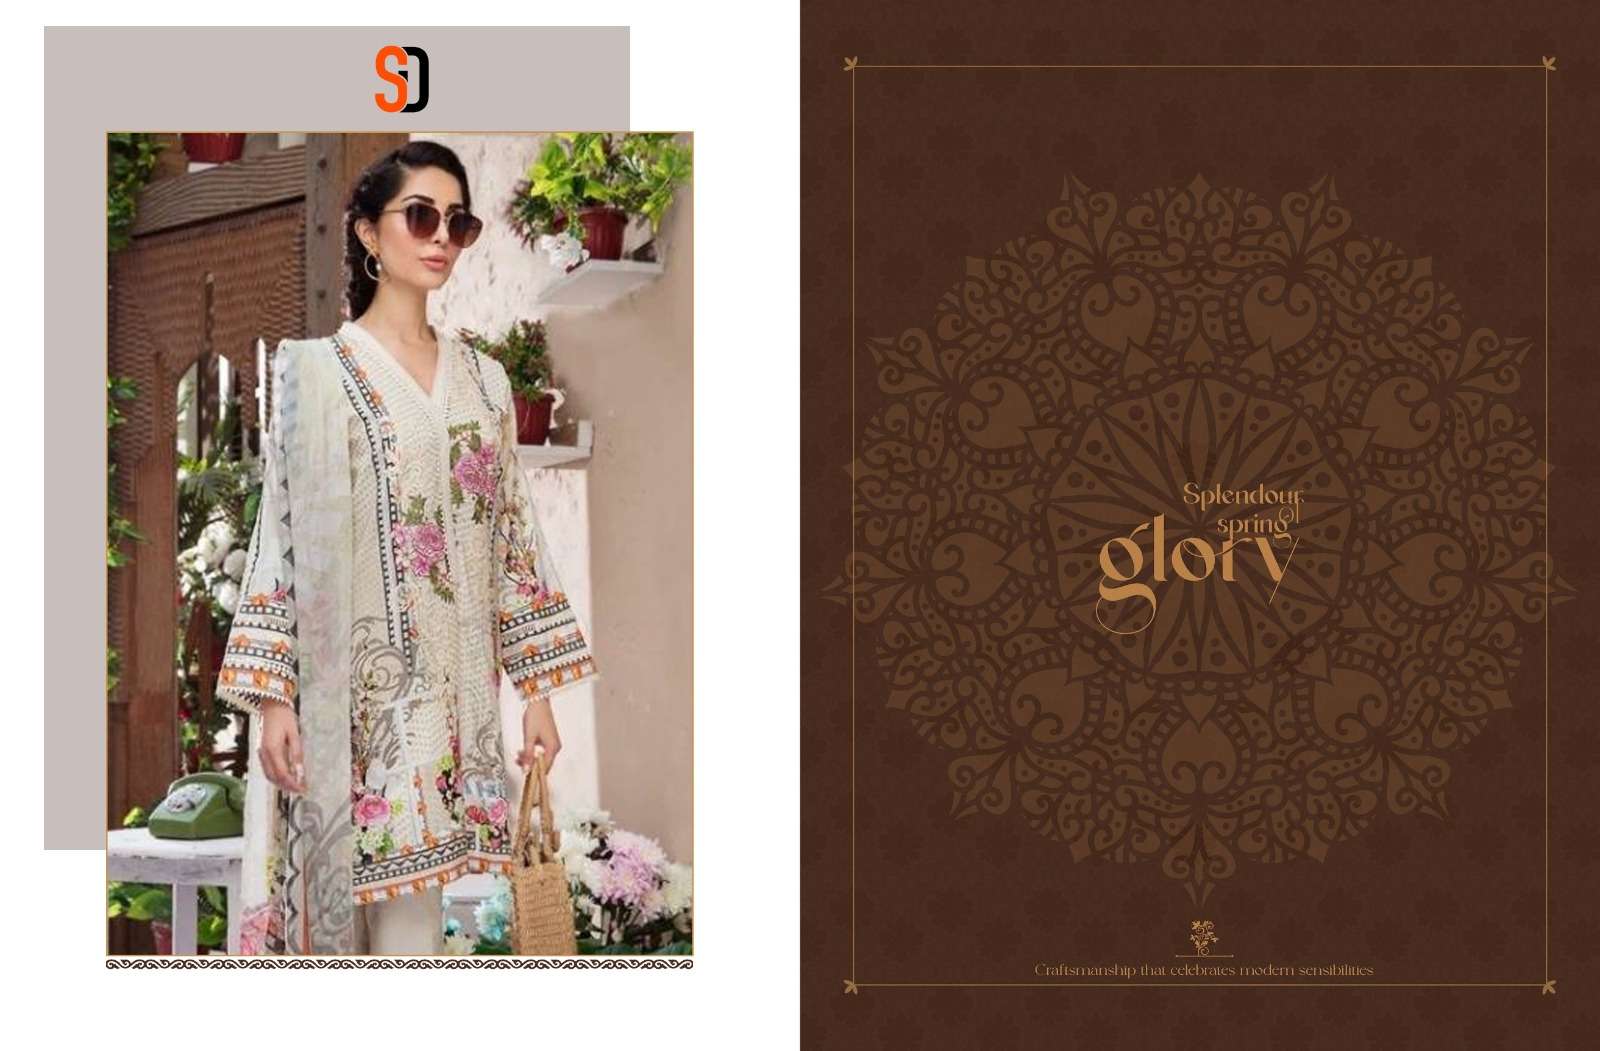 shraddha designer firdous vol-10 pakistani unstich dress material collection wholesale price surat